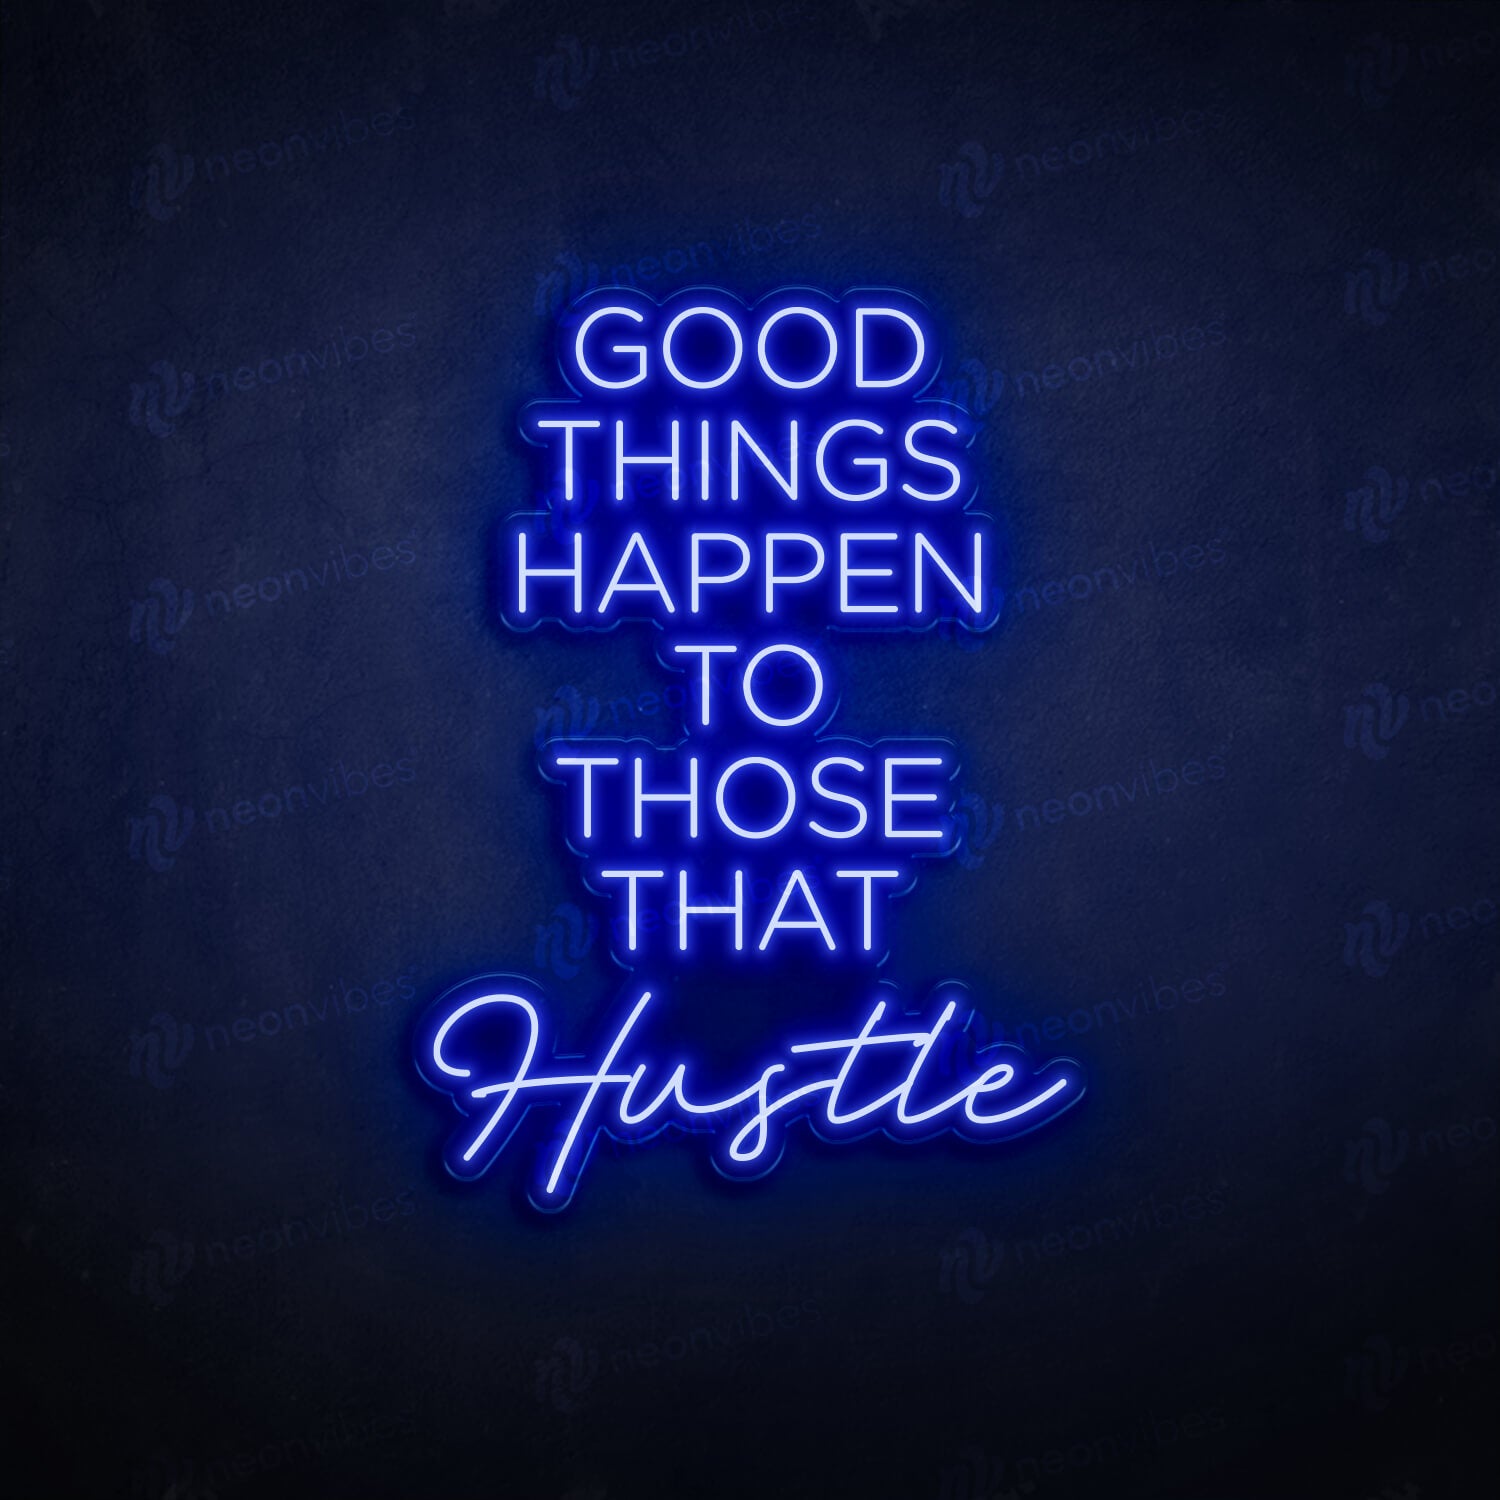 Good Things Hustle neon sign